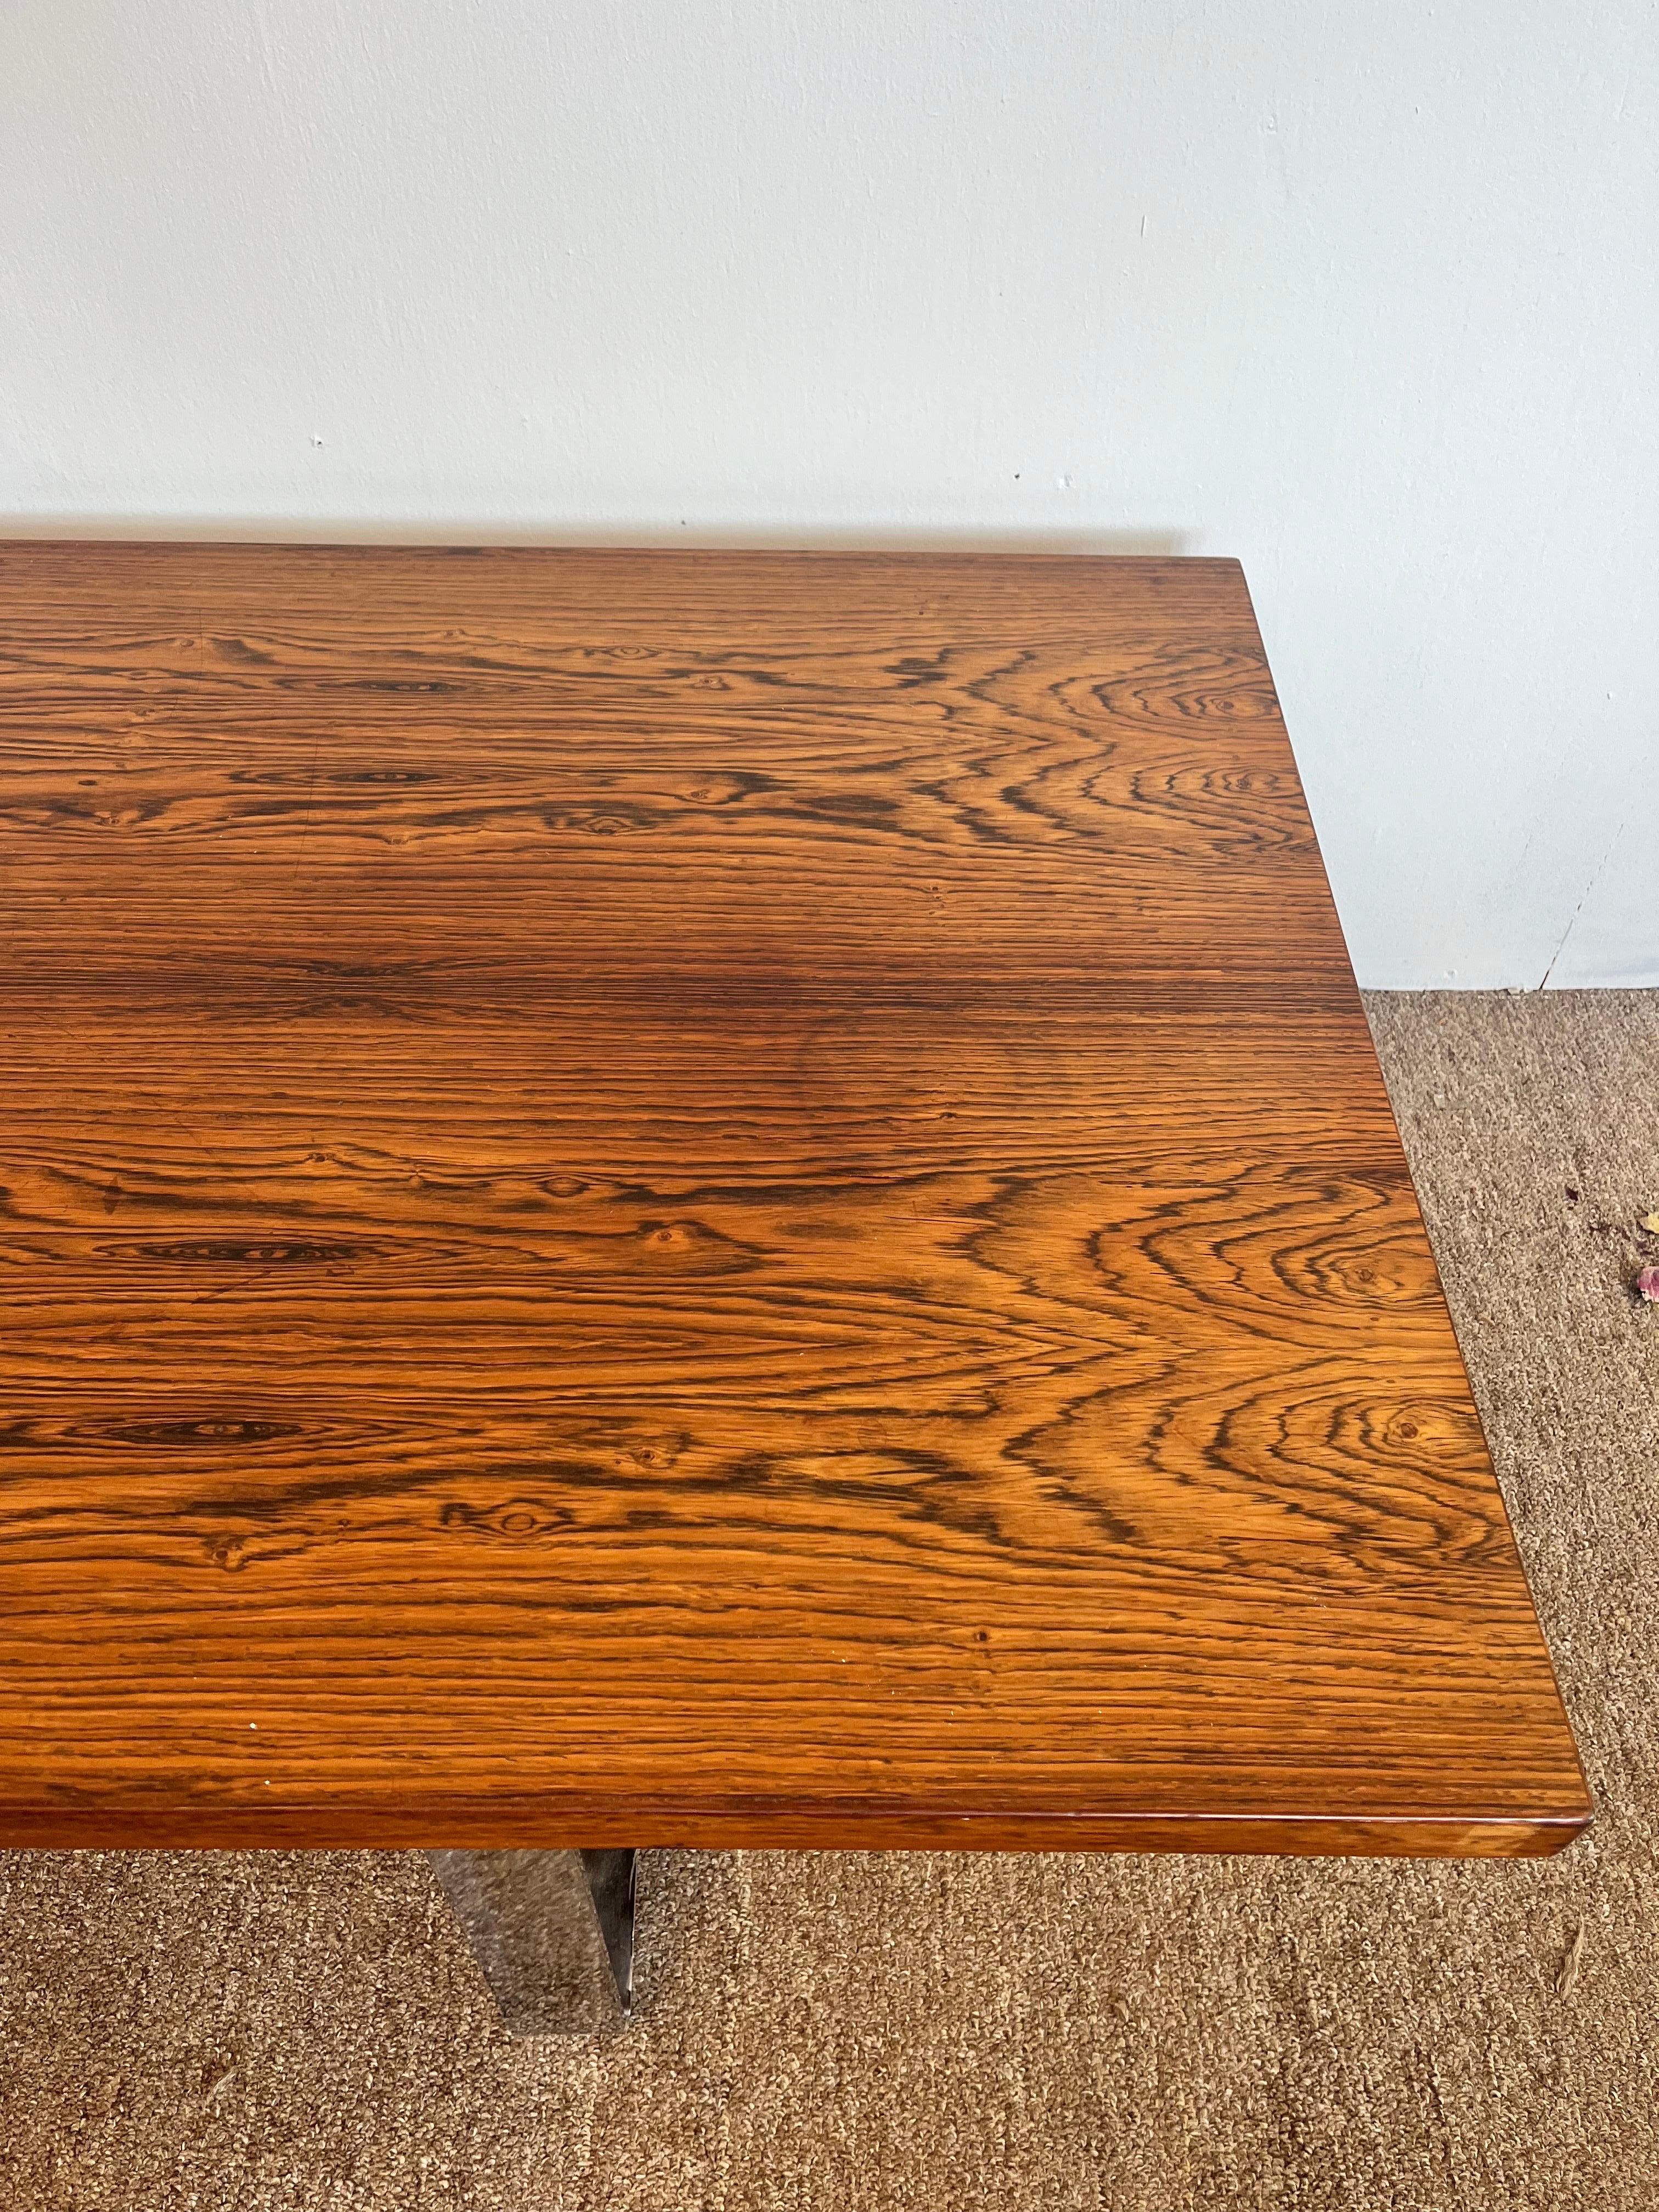 Bodil Kjaer for E. Pedersen Danish Modern Bench or Coffee Table Wood and Chrome For Sale 7